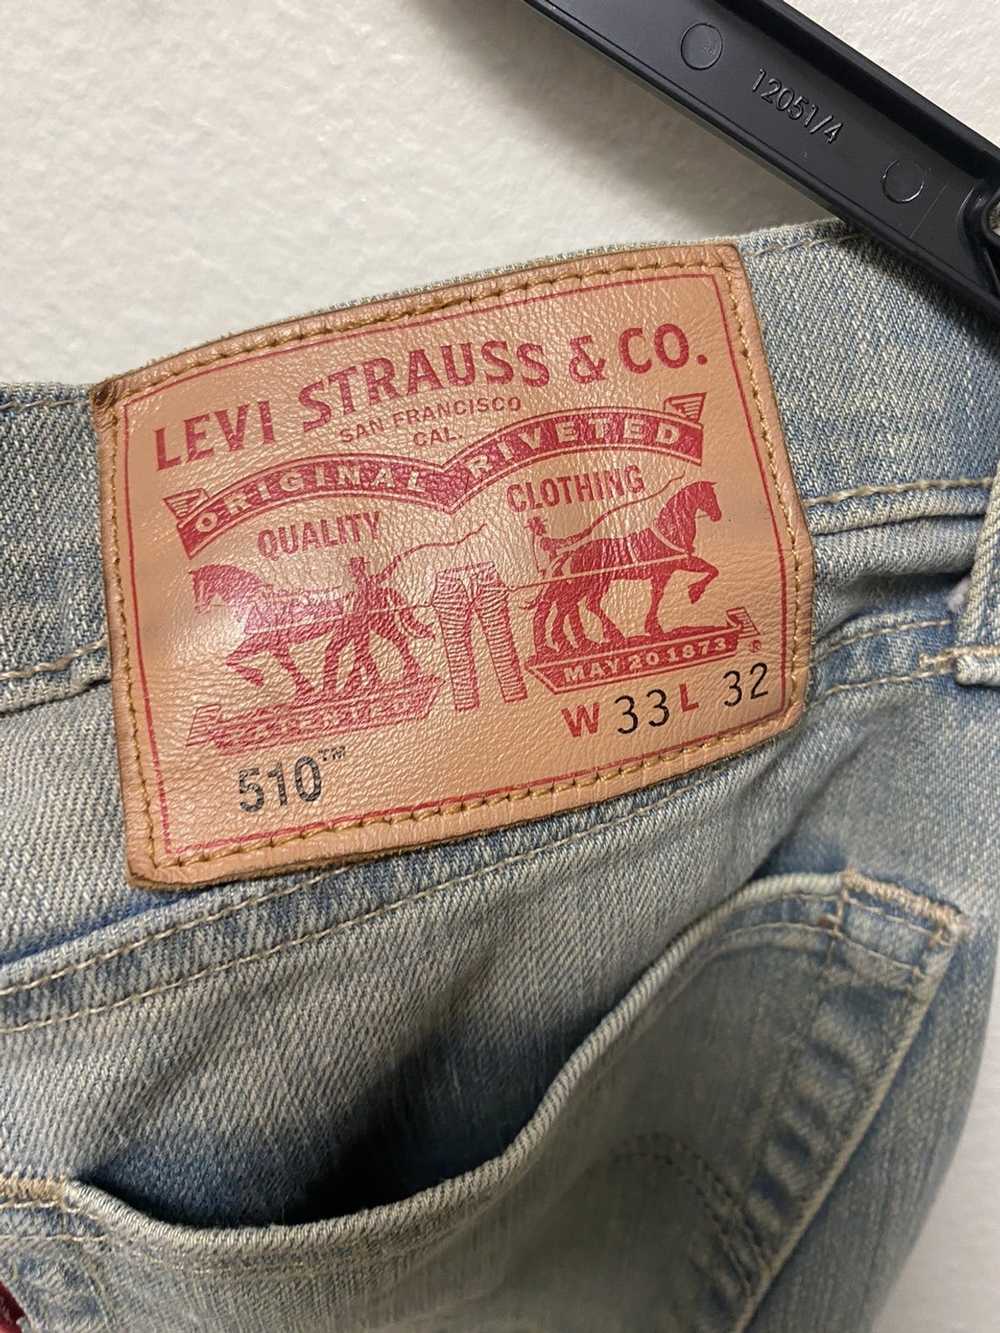 Levi's × Levi's Vintage Clothing Levi’s - image 3